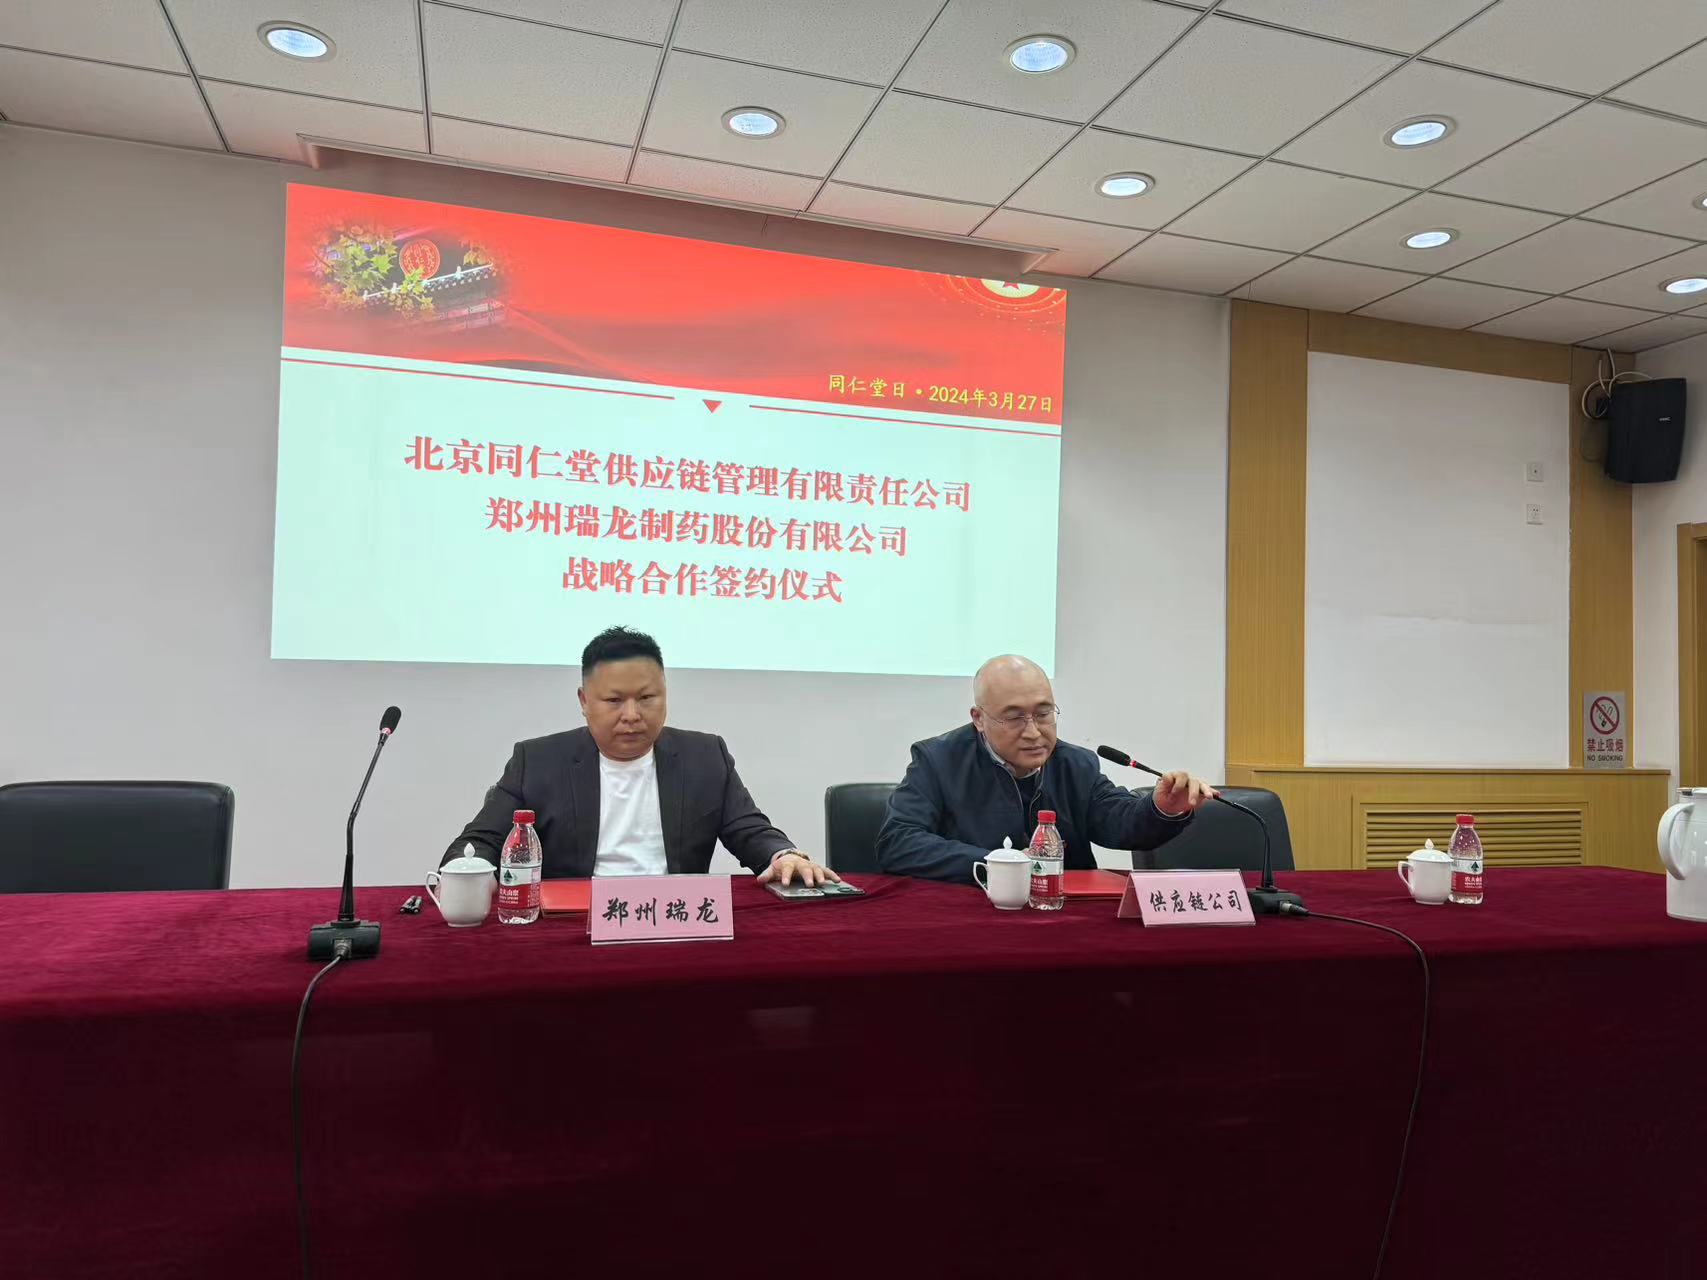 bat365中国官方网站与同仁堂集团签订战略合作协议